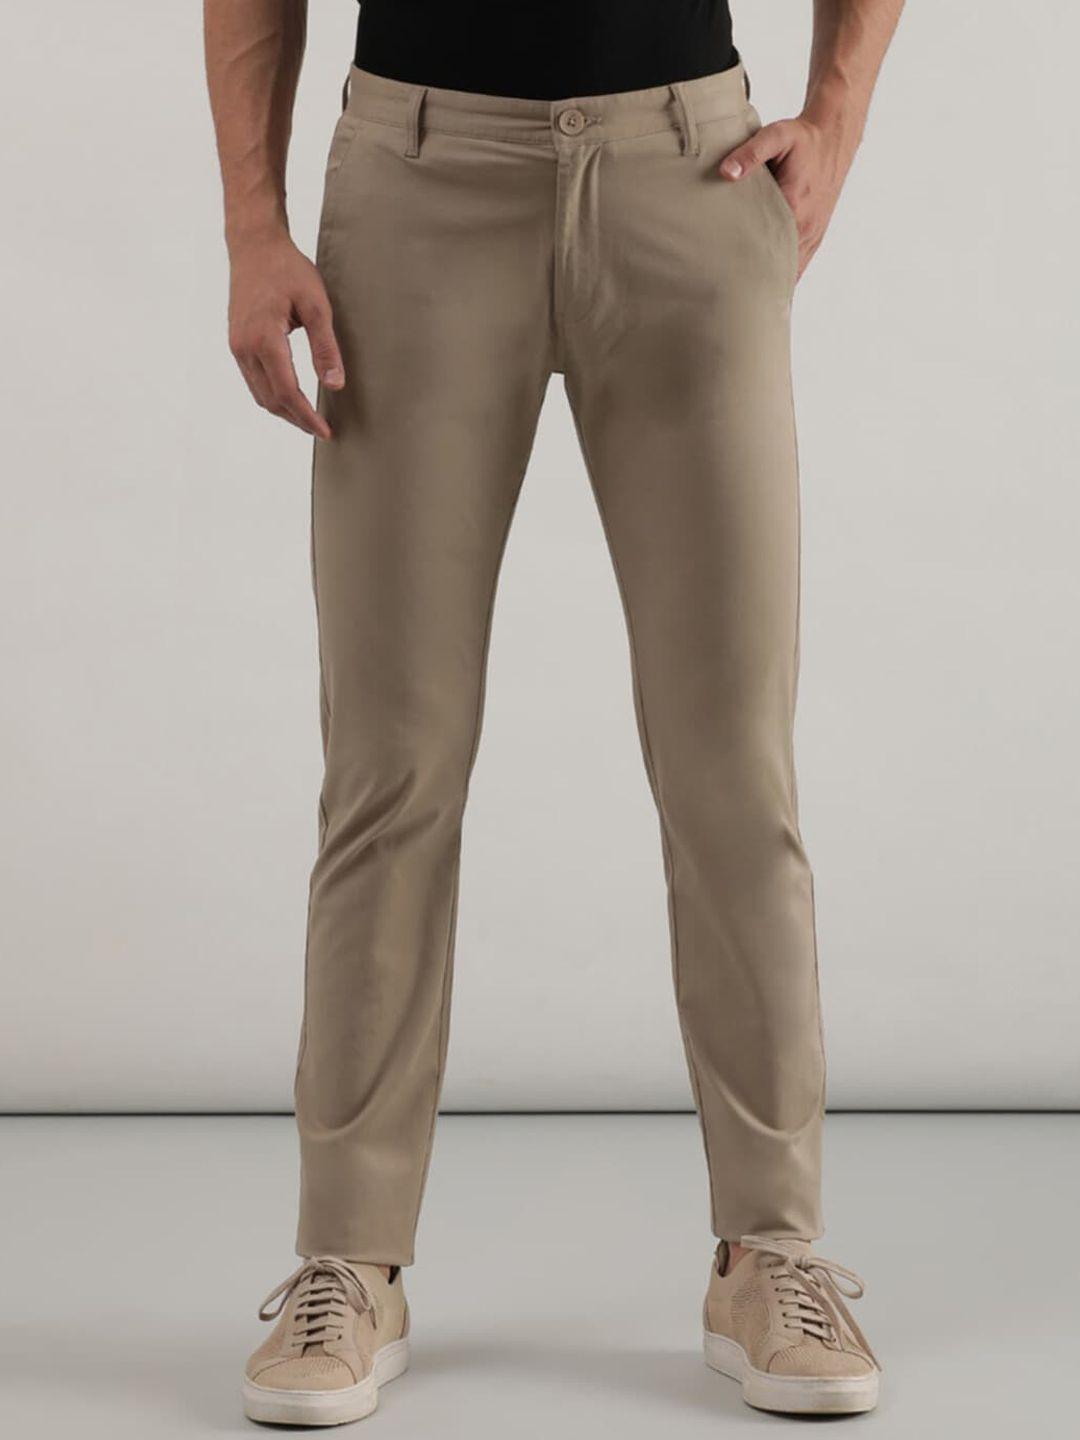 lee-men-slim-fit-low-rise-cotton-regular-trousers